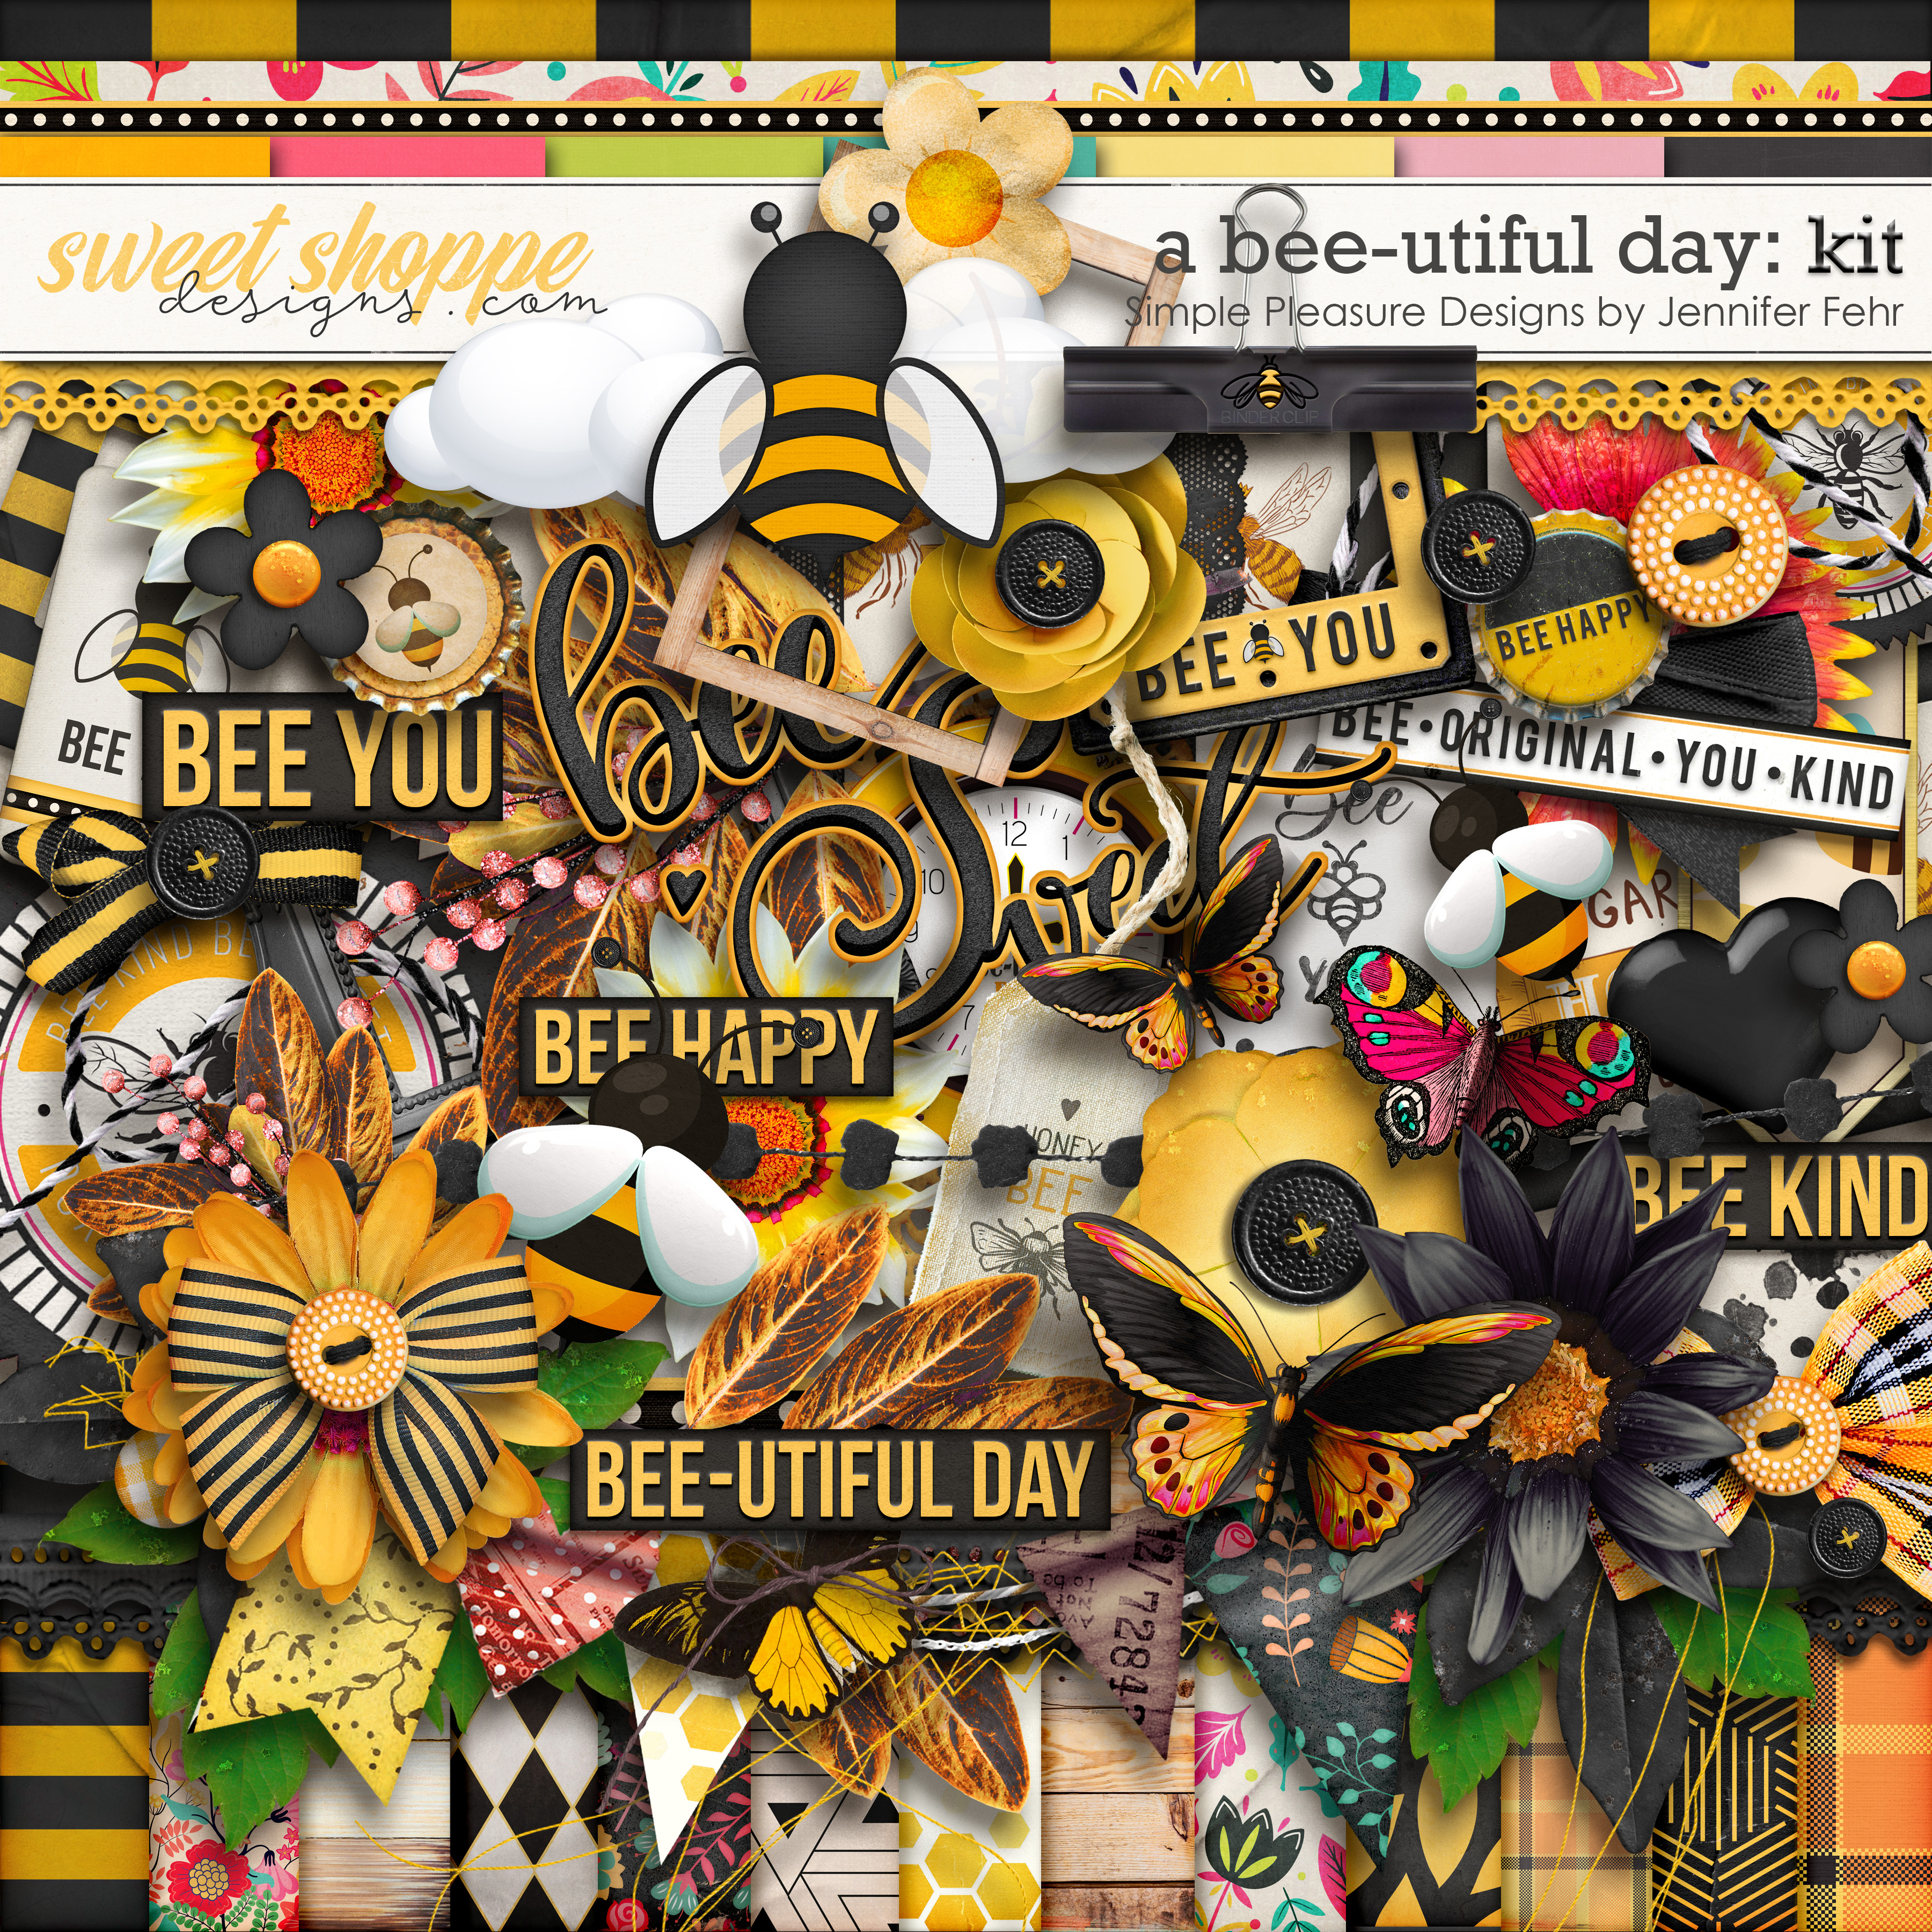 a bee-utiful day kit: simple pleasure designs by jennifer fehr